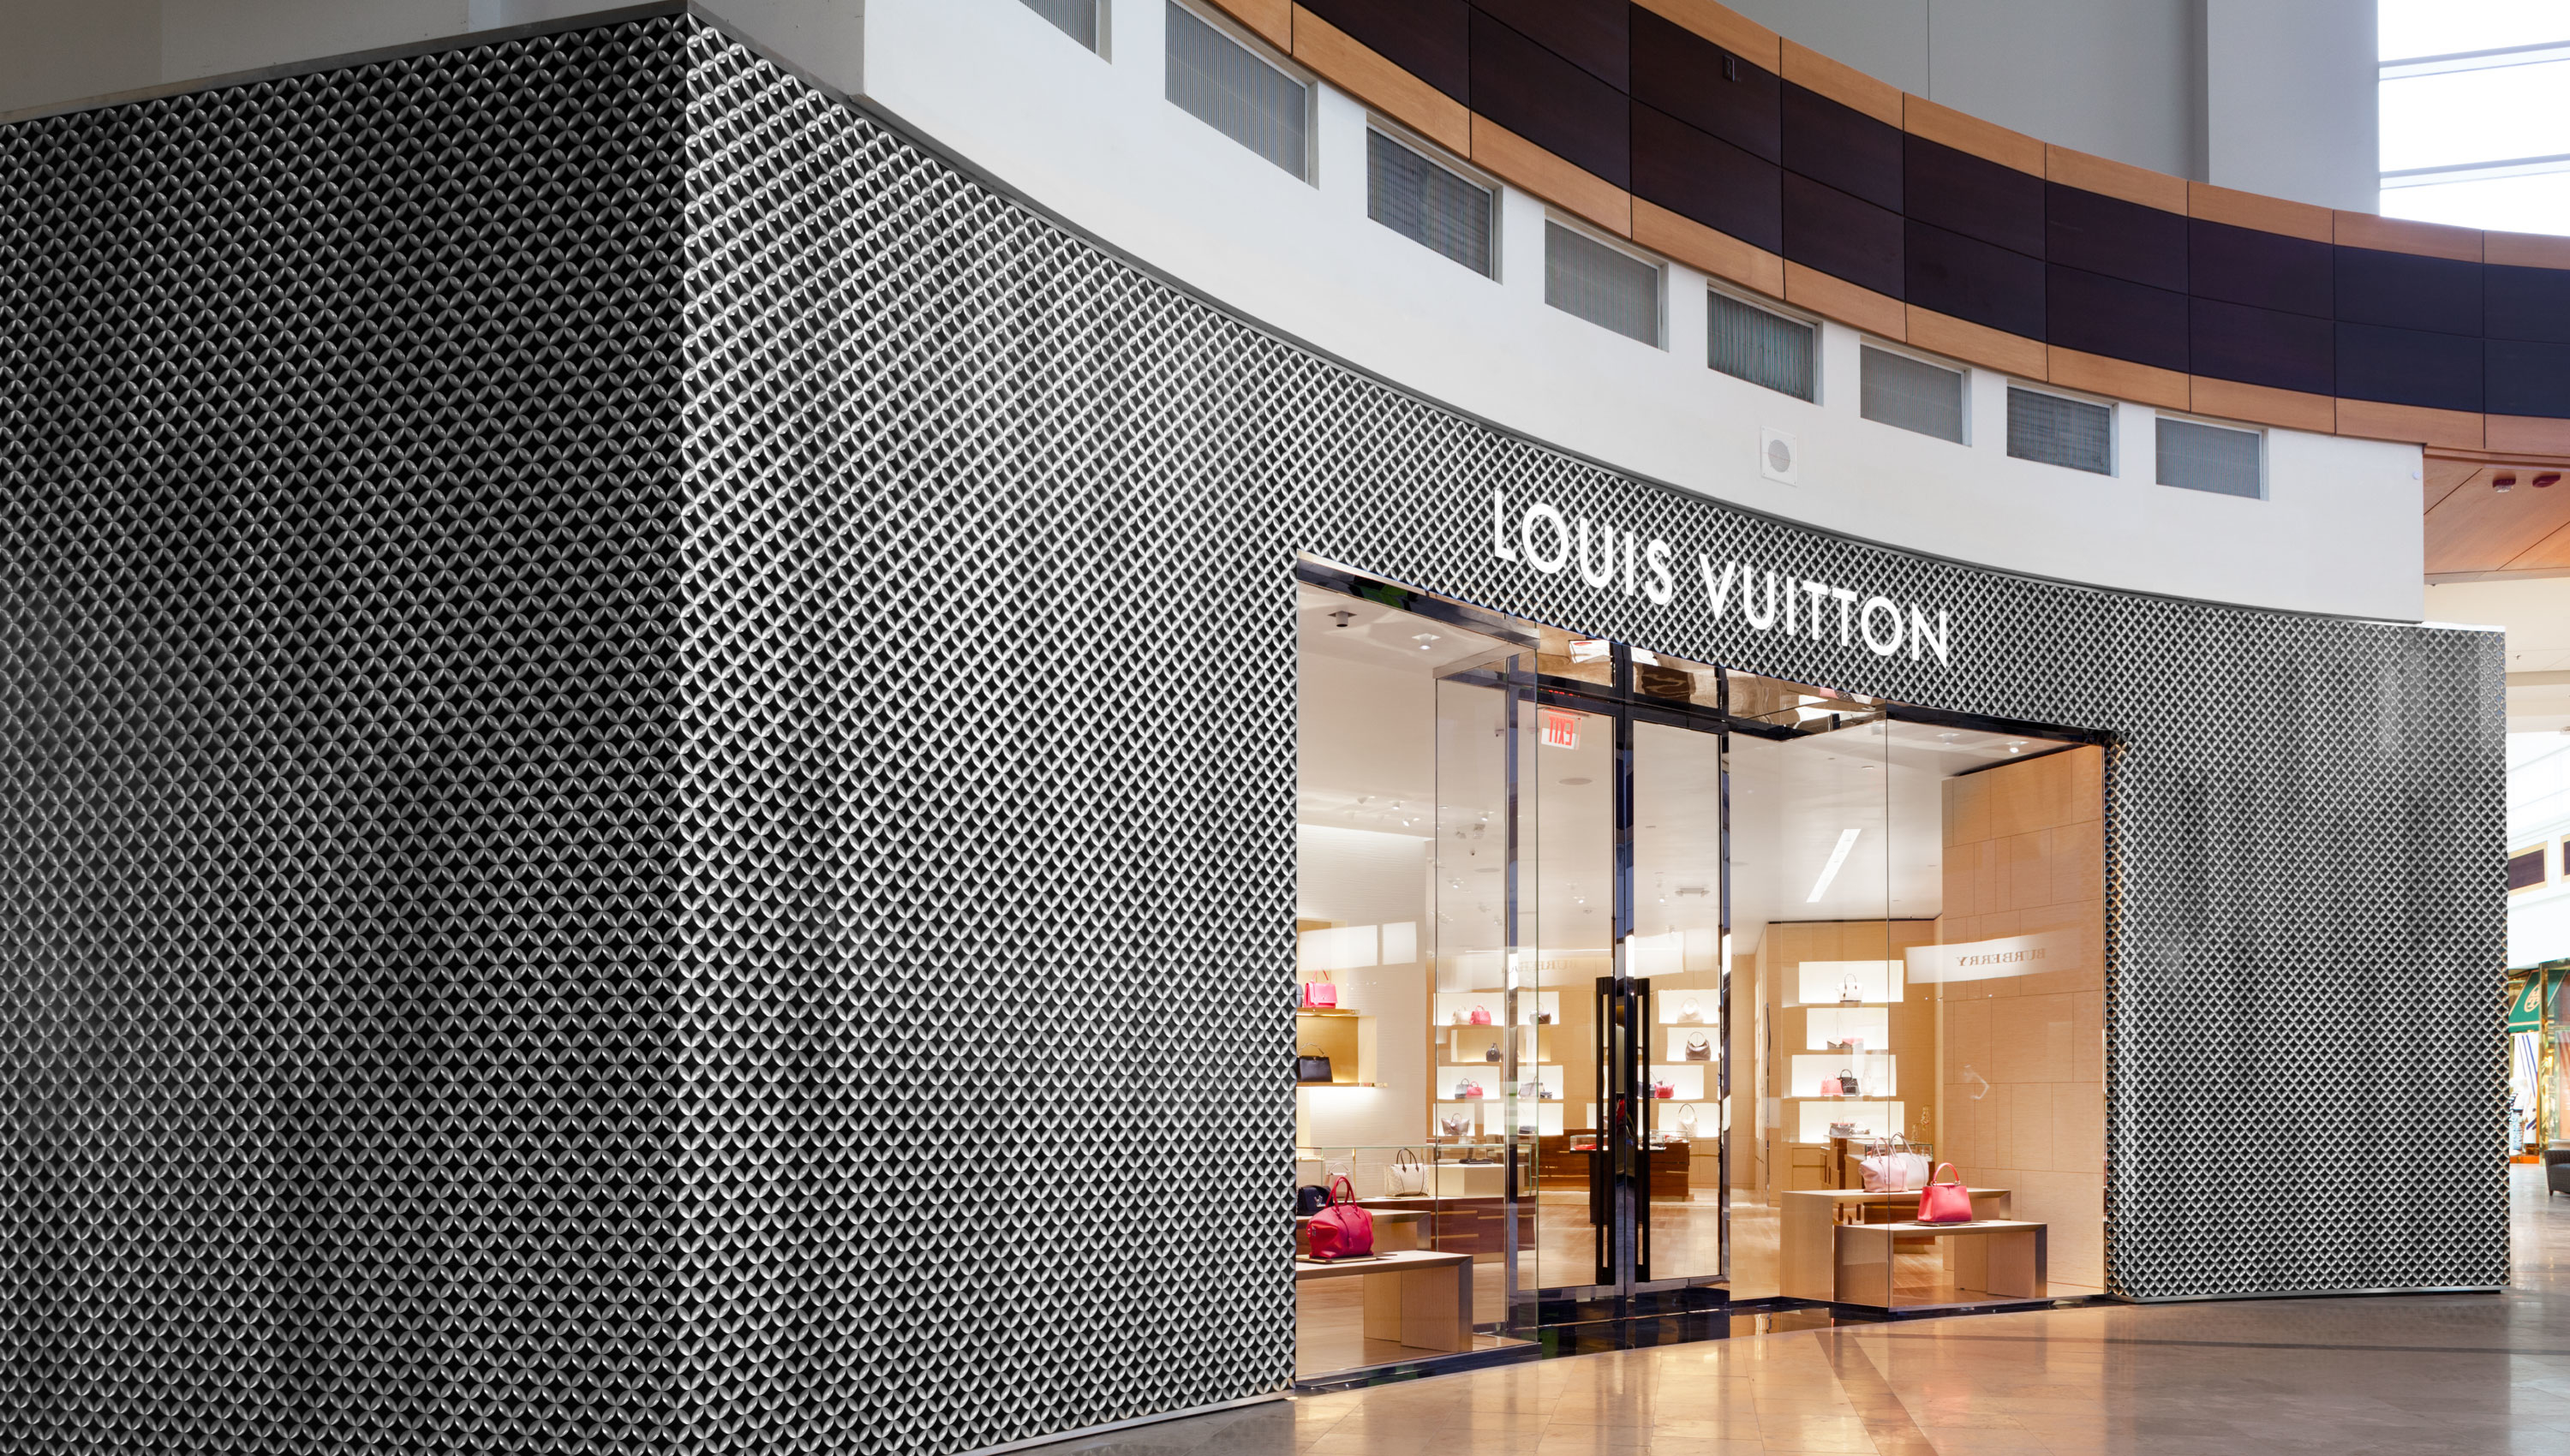 Louis Vuitton Charlotte SouthPark - 4400 Sharon Road, Charlotte, NC | 0